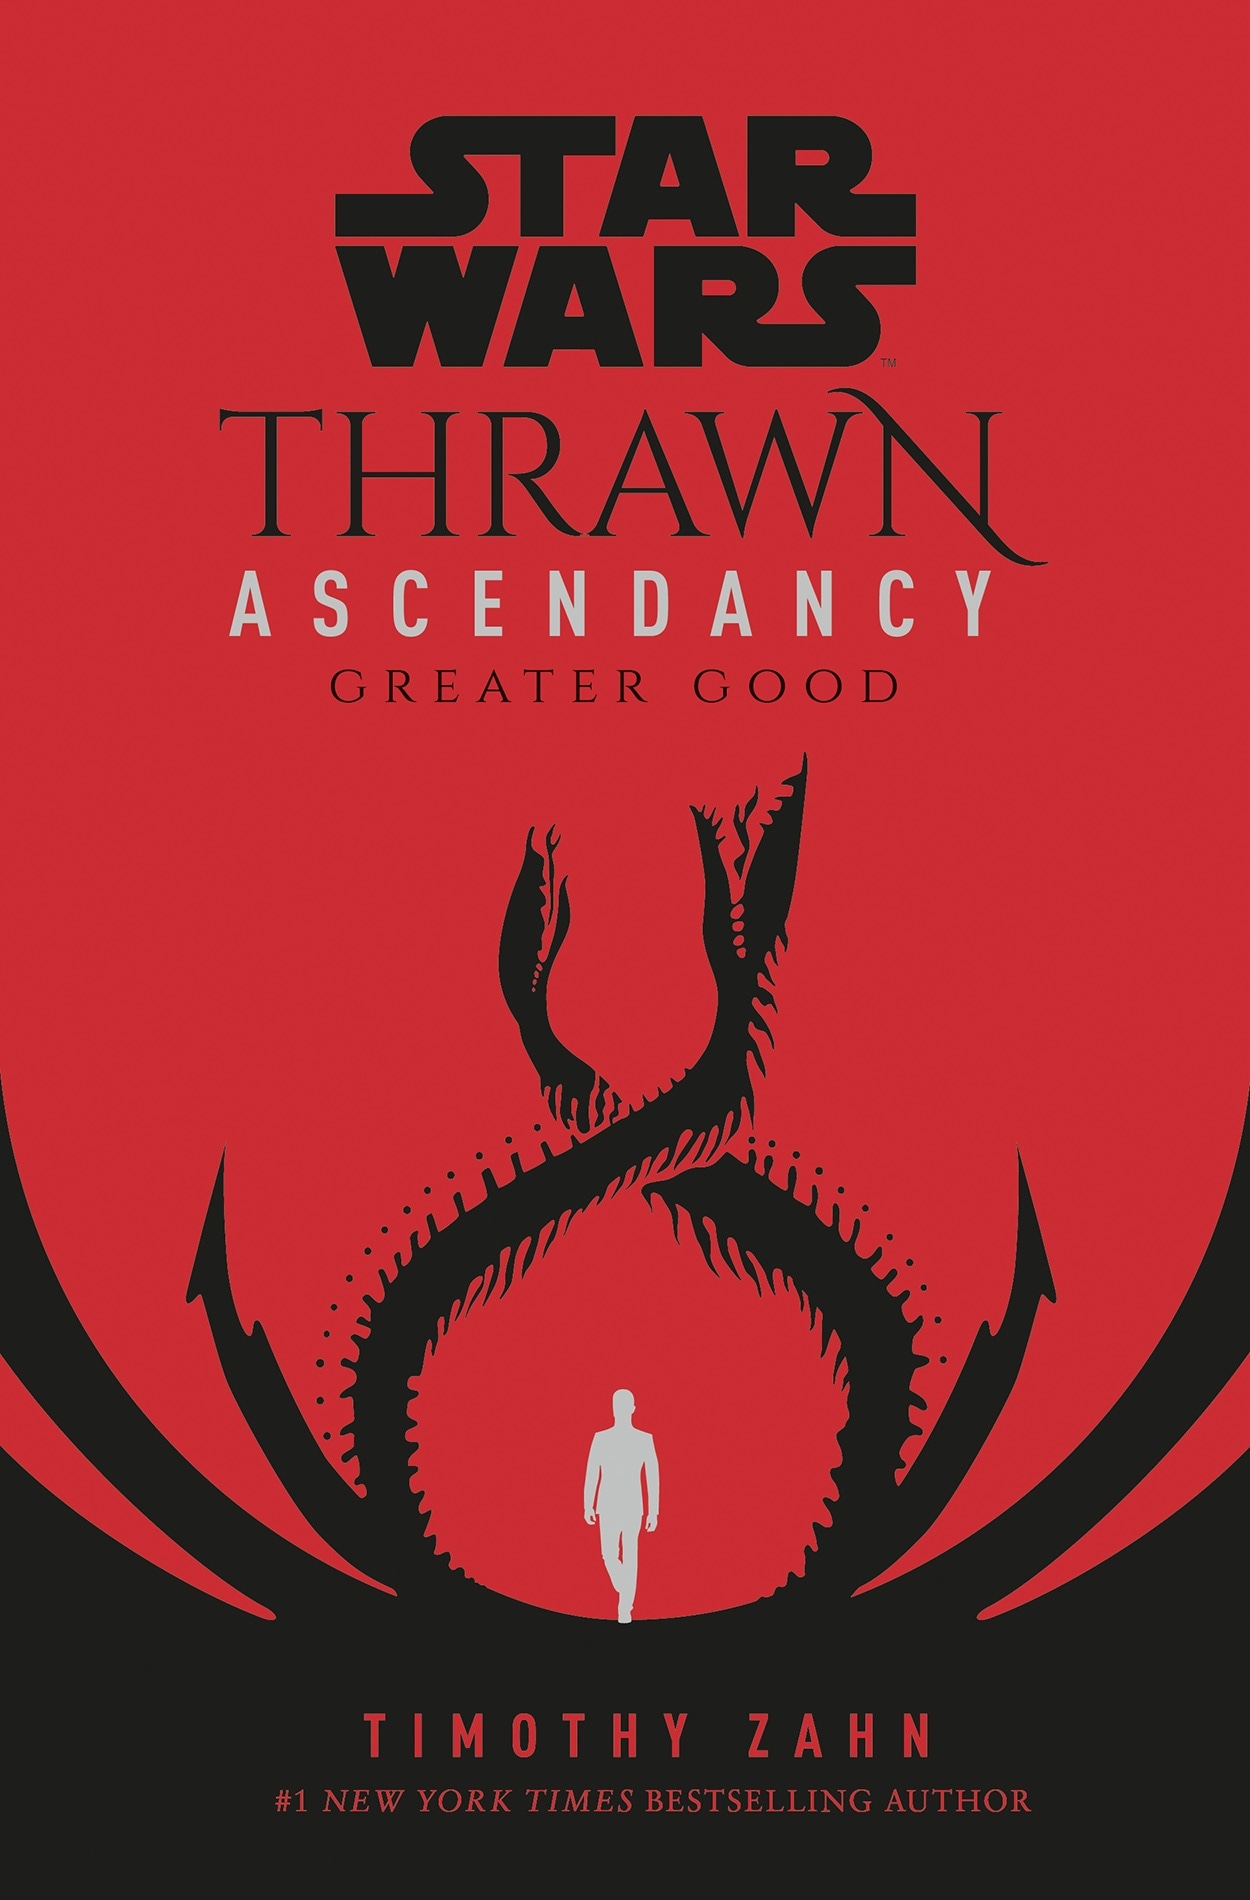 Book “Star Wars: Thrawn Ascendancy” by Timothy Zahn — April 27, 2021